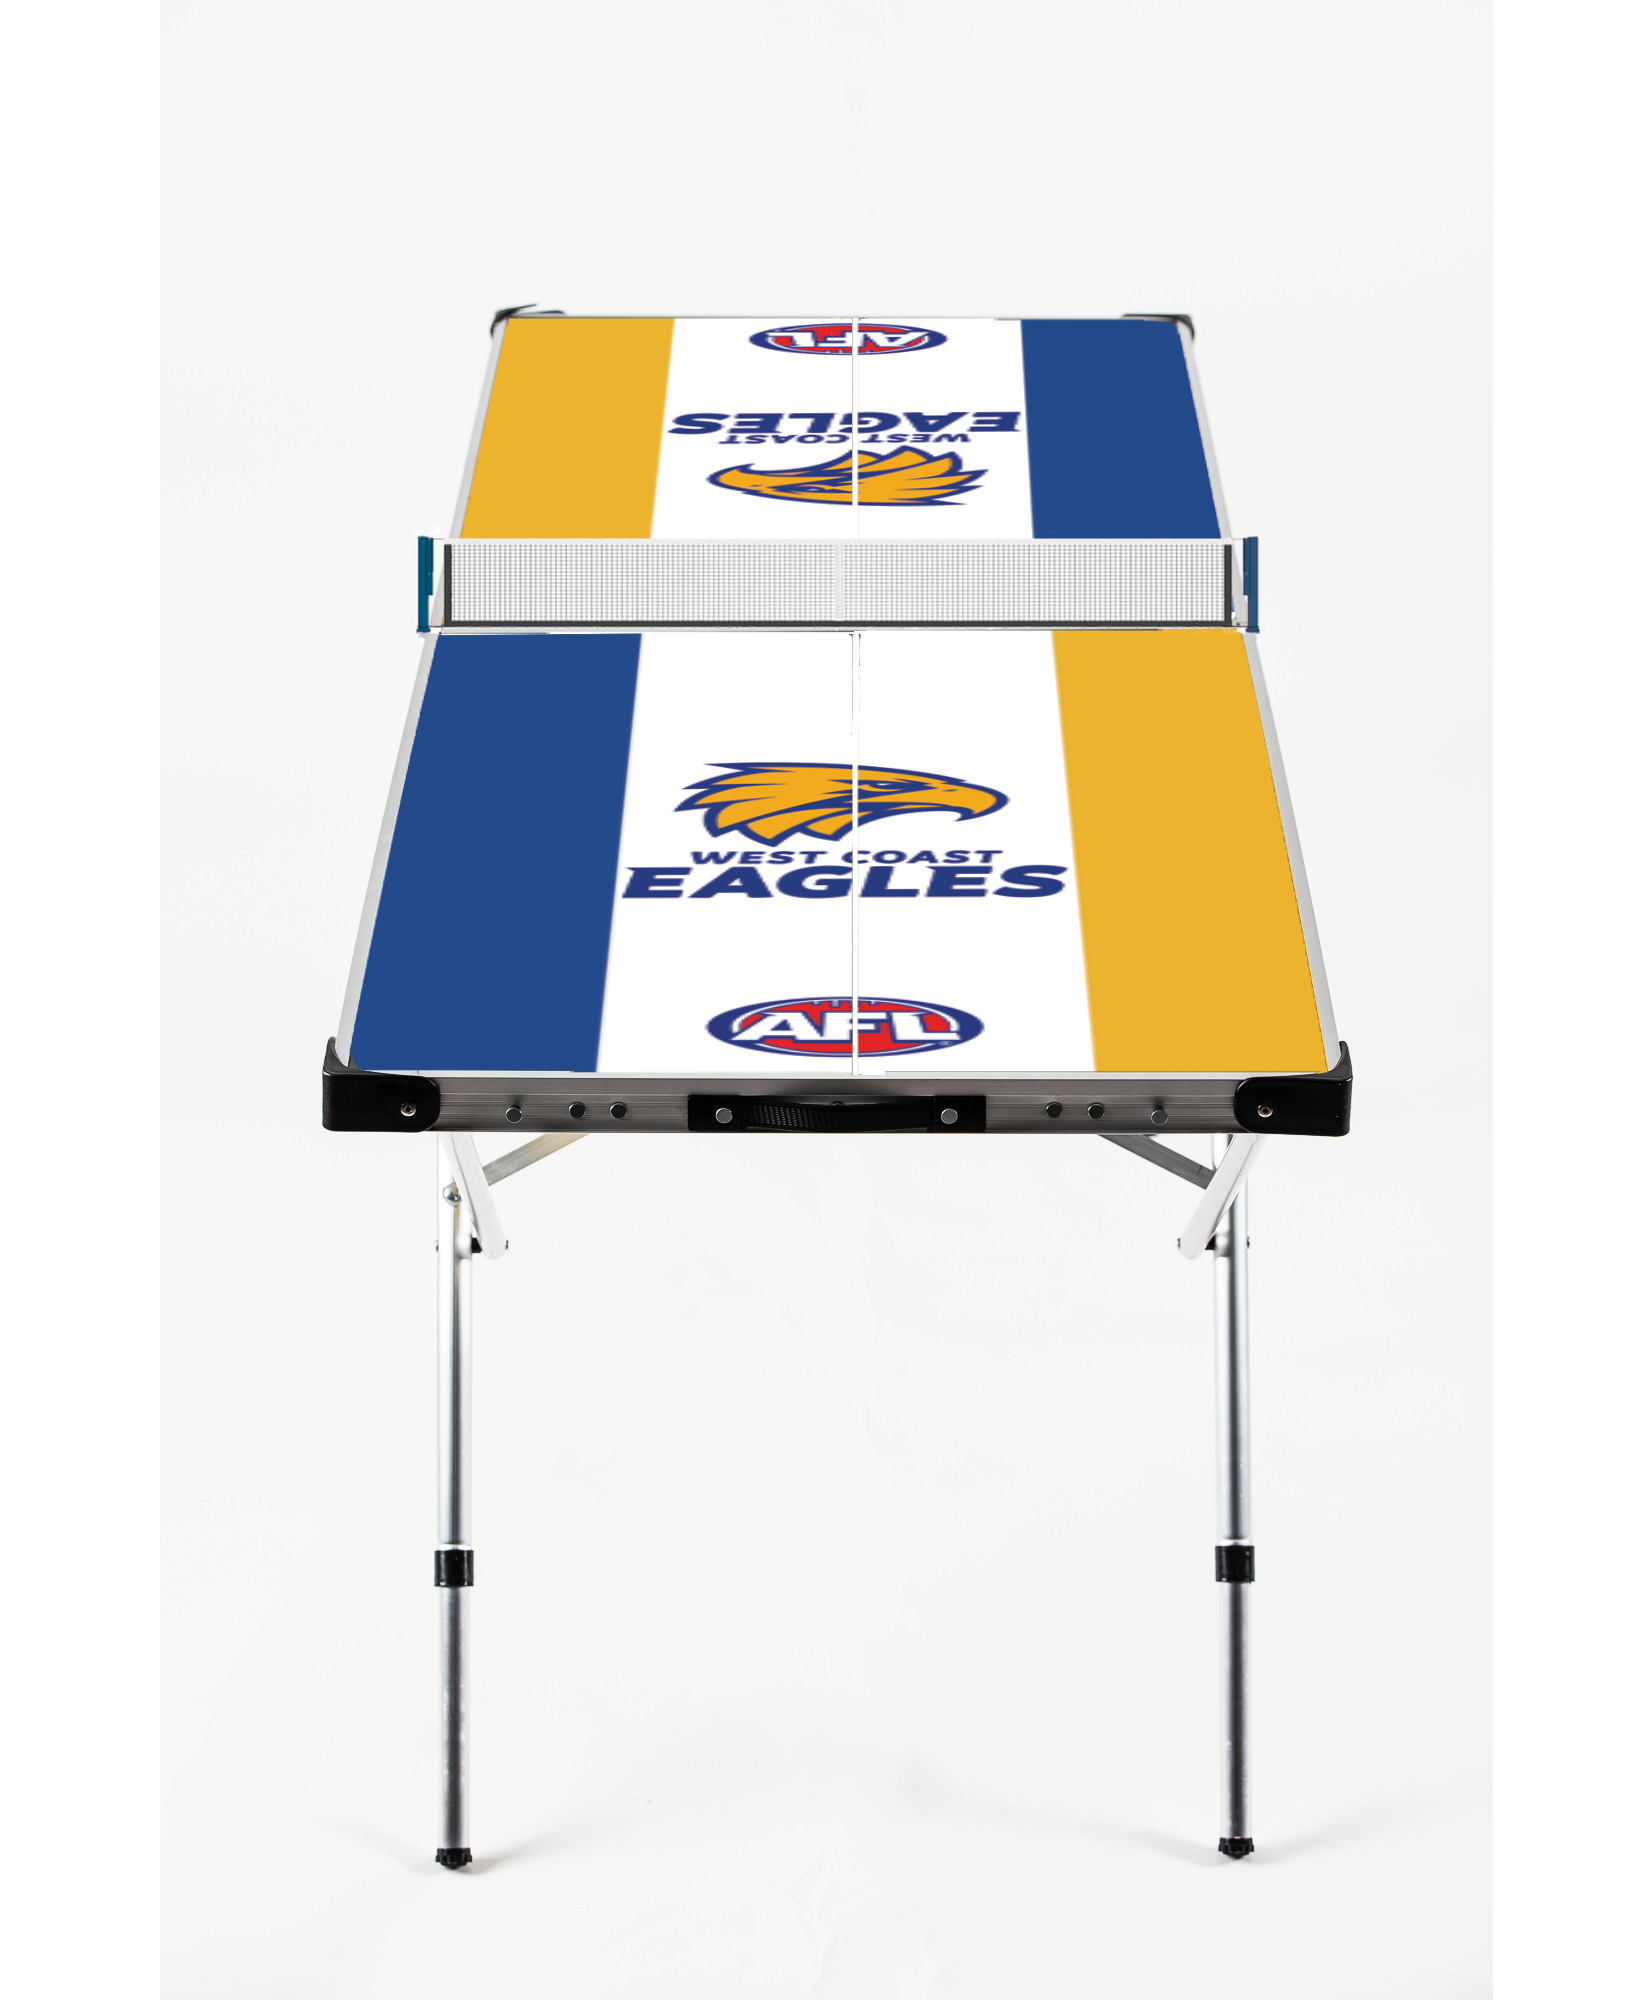 West Coast Eagles AFL Mini Table Tennis